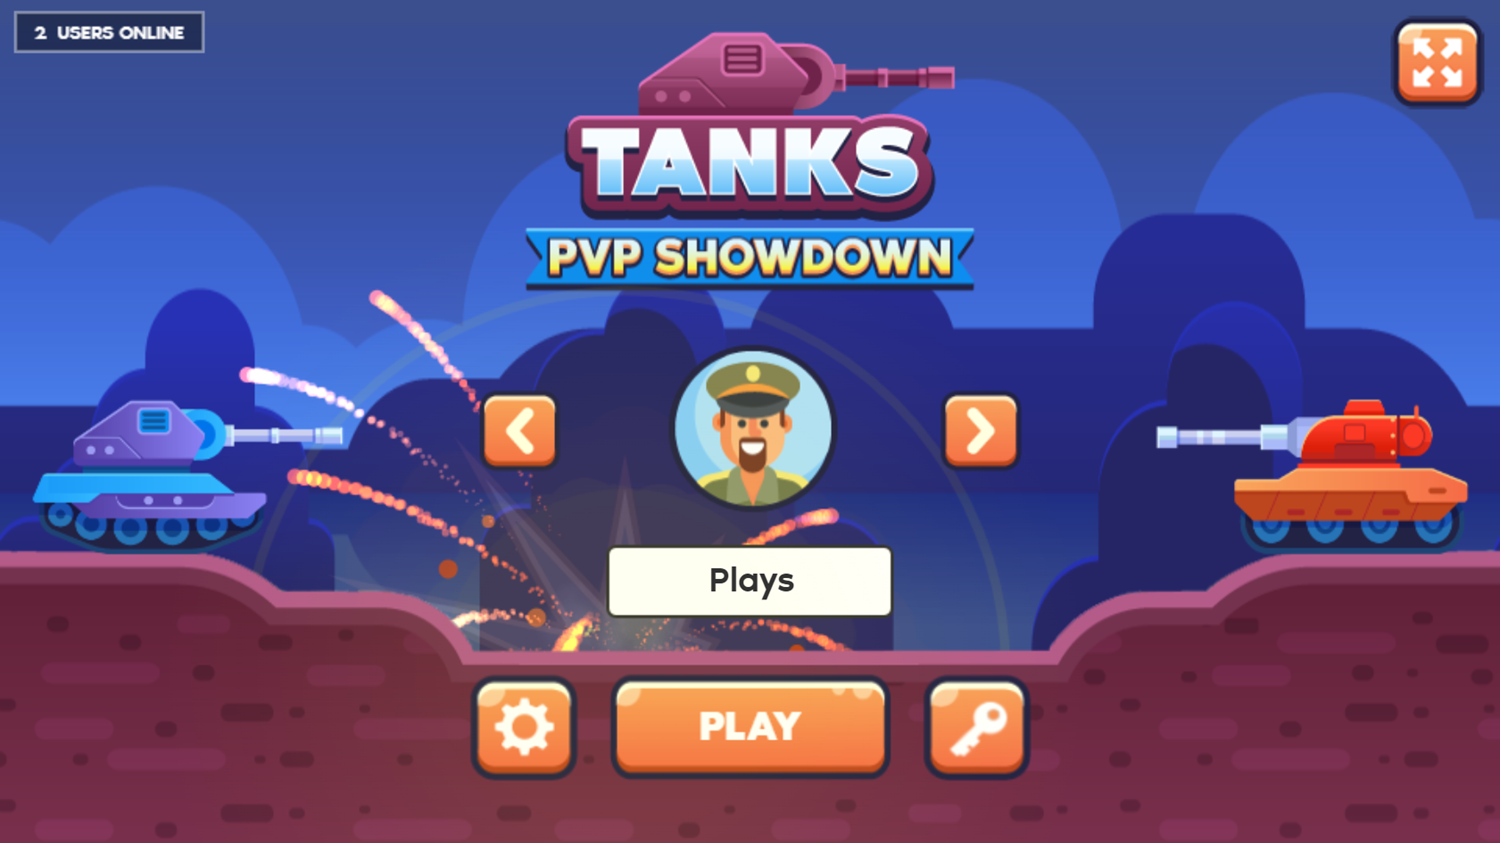 Tanks PVP Showdown Game Welcome Screen Screenshot.